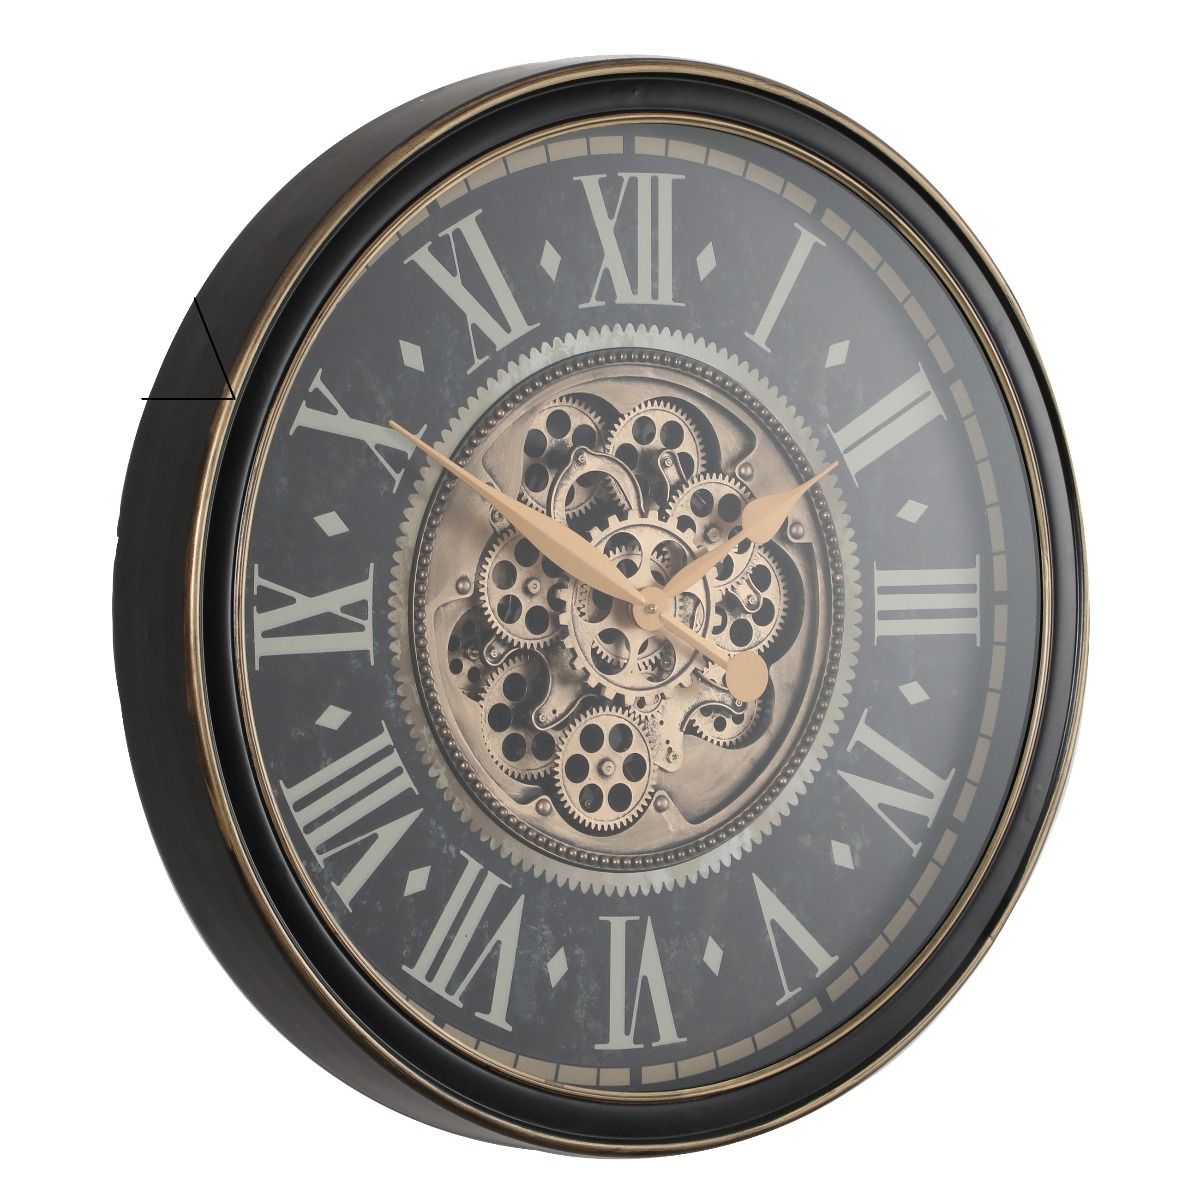 Industrial/vintage-inspired clock range - MODEL 015